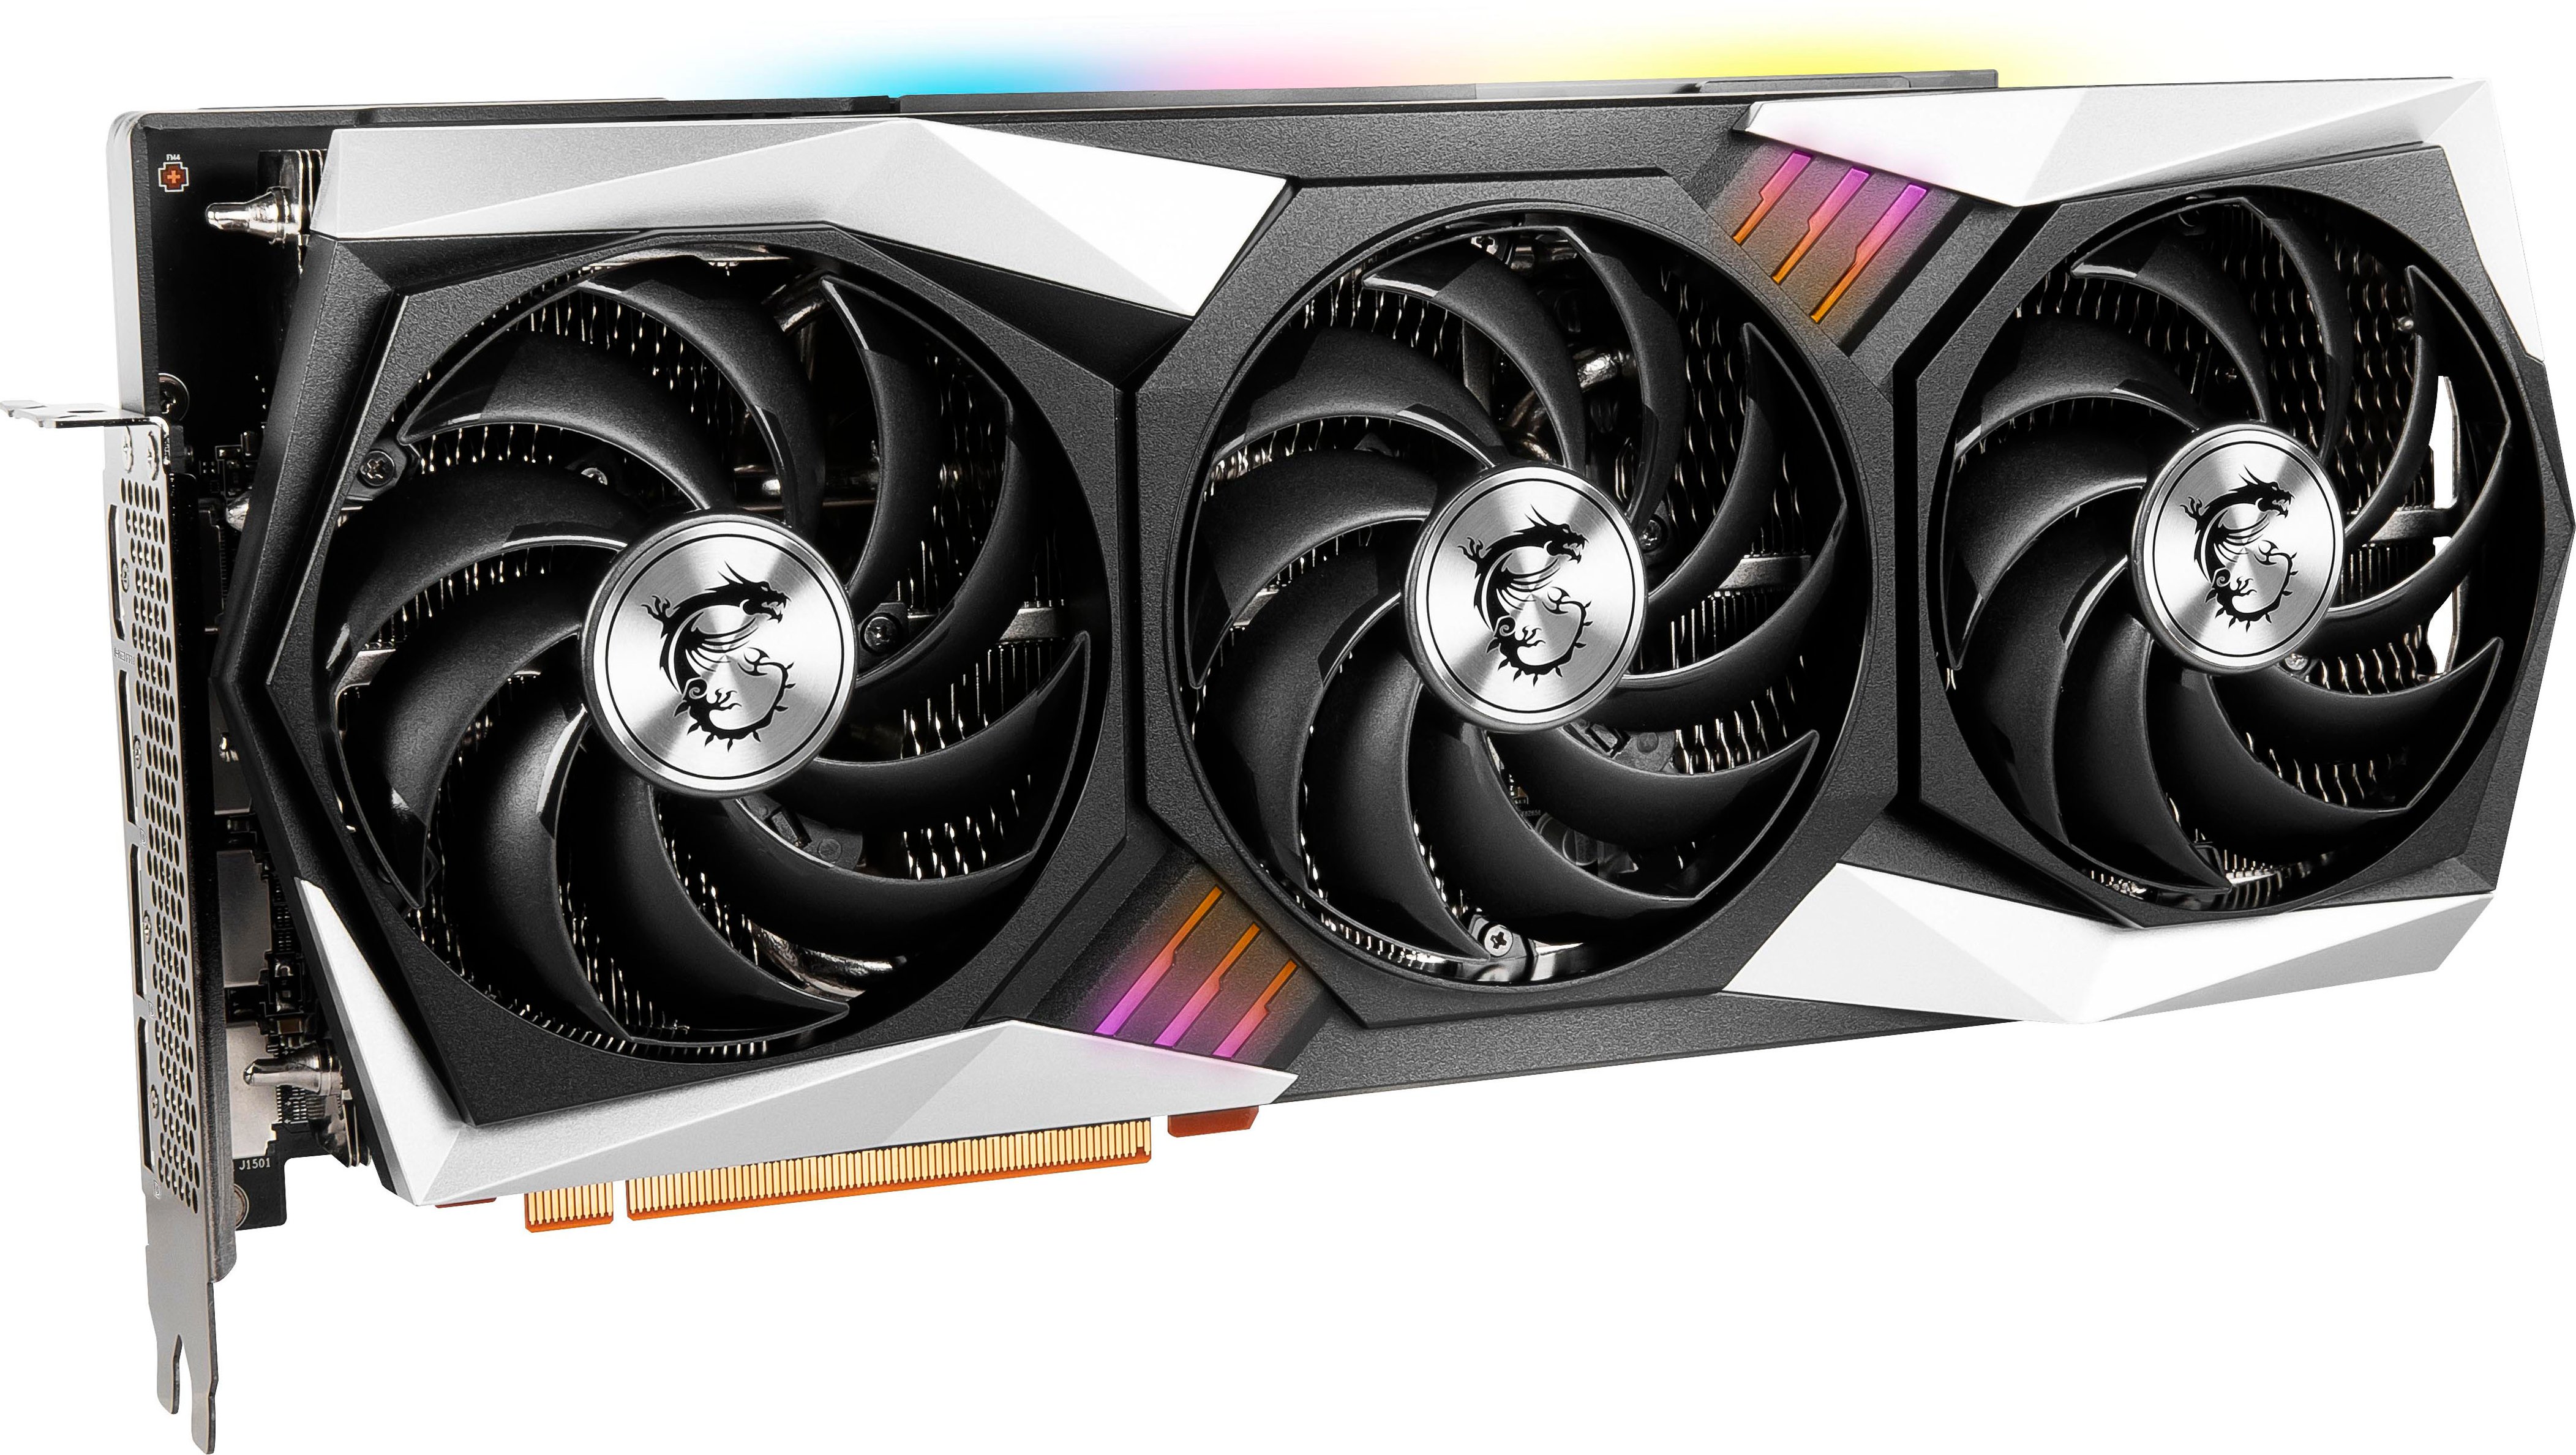 AMD RADEON RX 6800 XT 16GB GDDR6 GRAPHICS CARD - MIDNIGHT BLACK